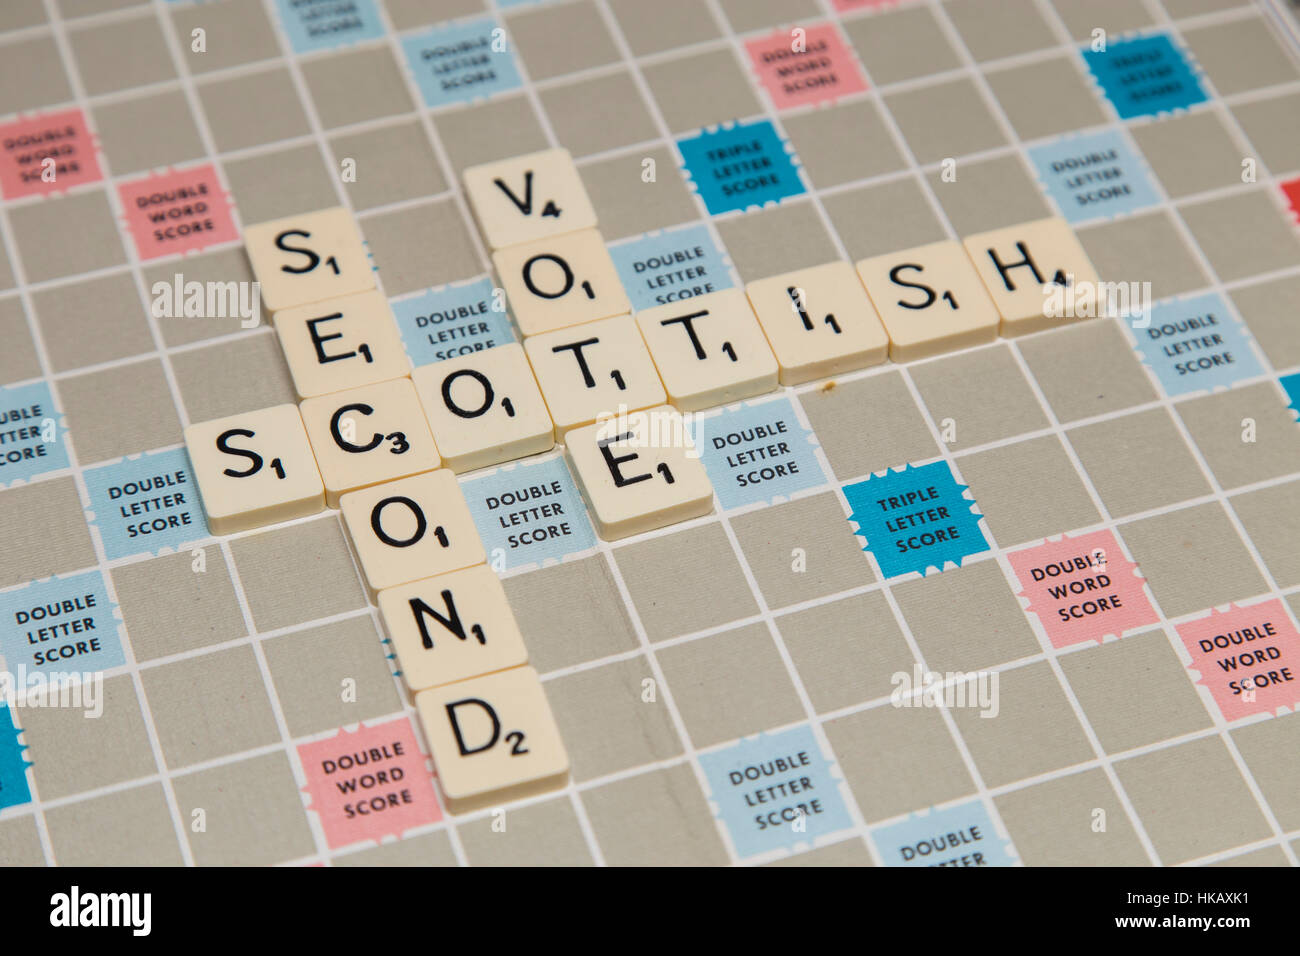 Second Scottish Vote and Scotand, United Kingdom, referendum in Scrabble letters Stock Photo